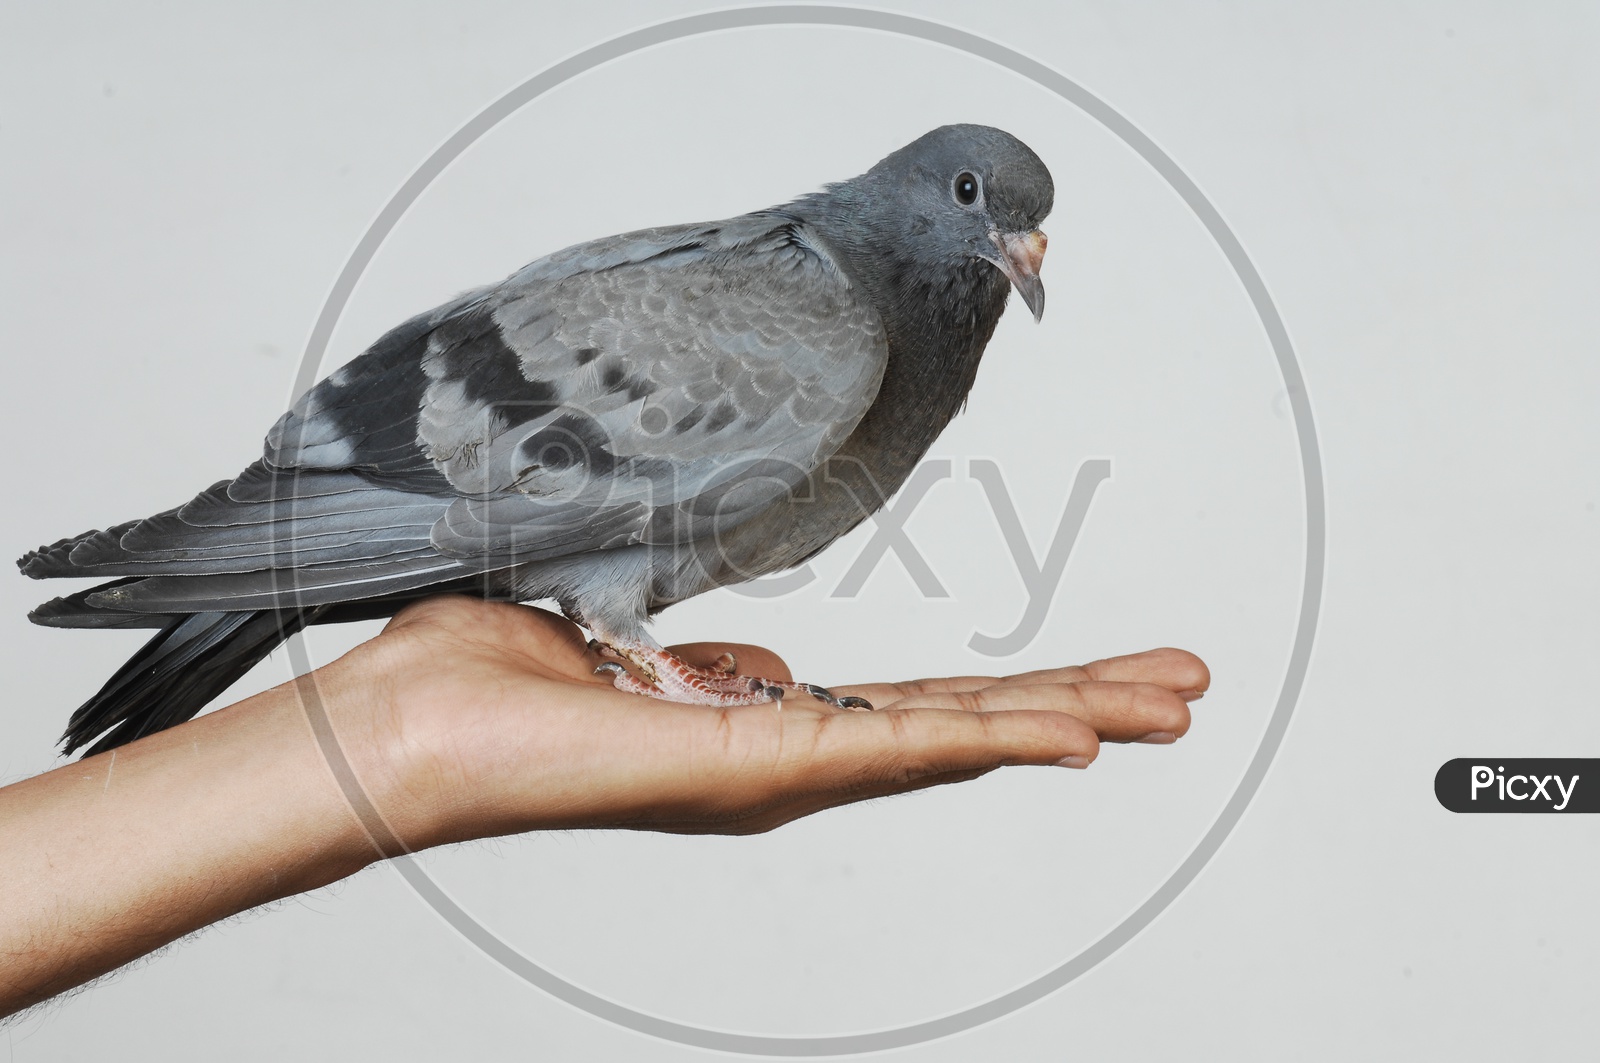 Pigeon bird standing on human hand